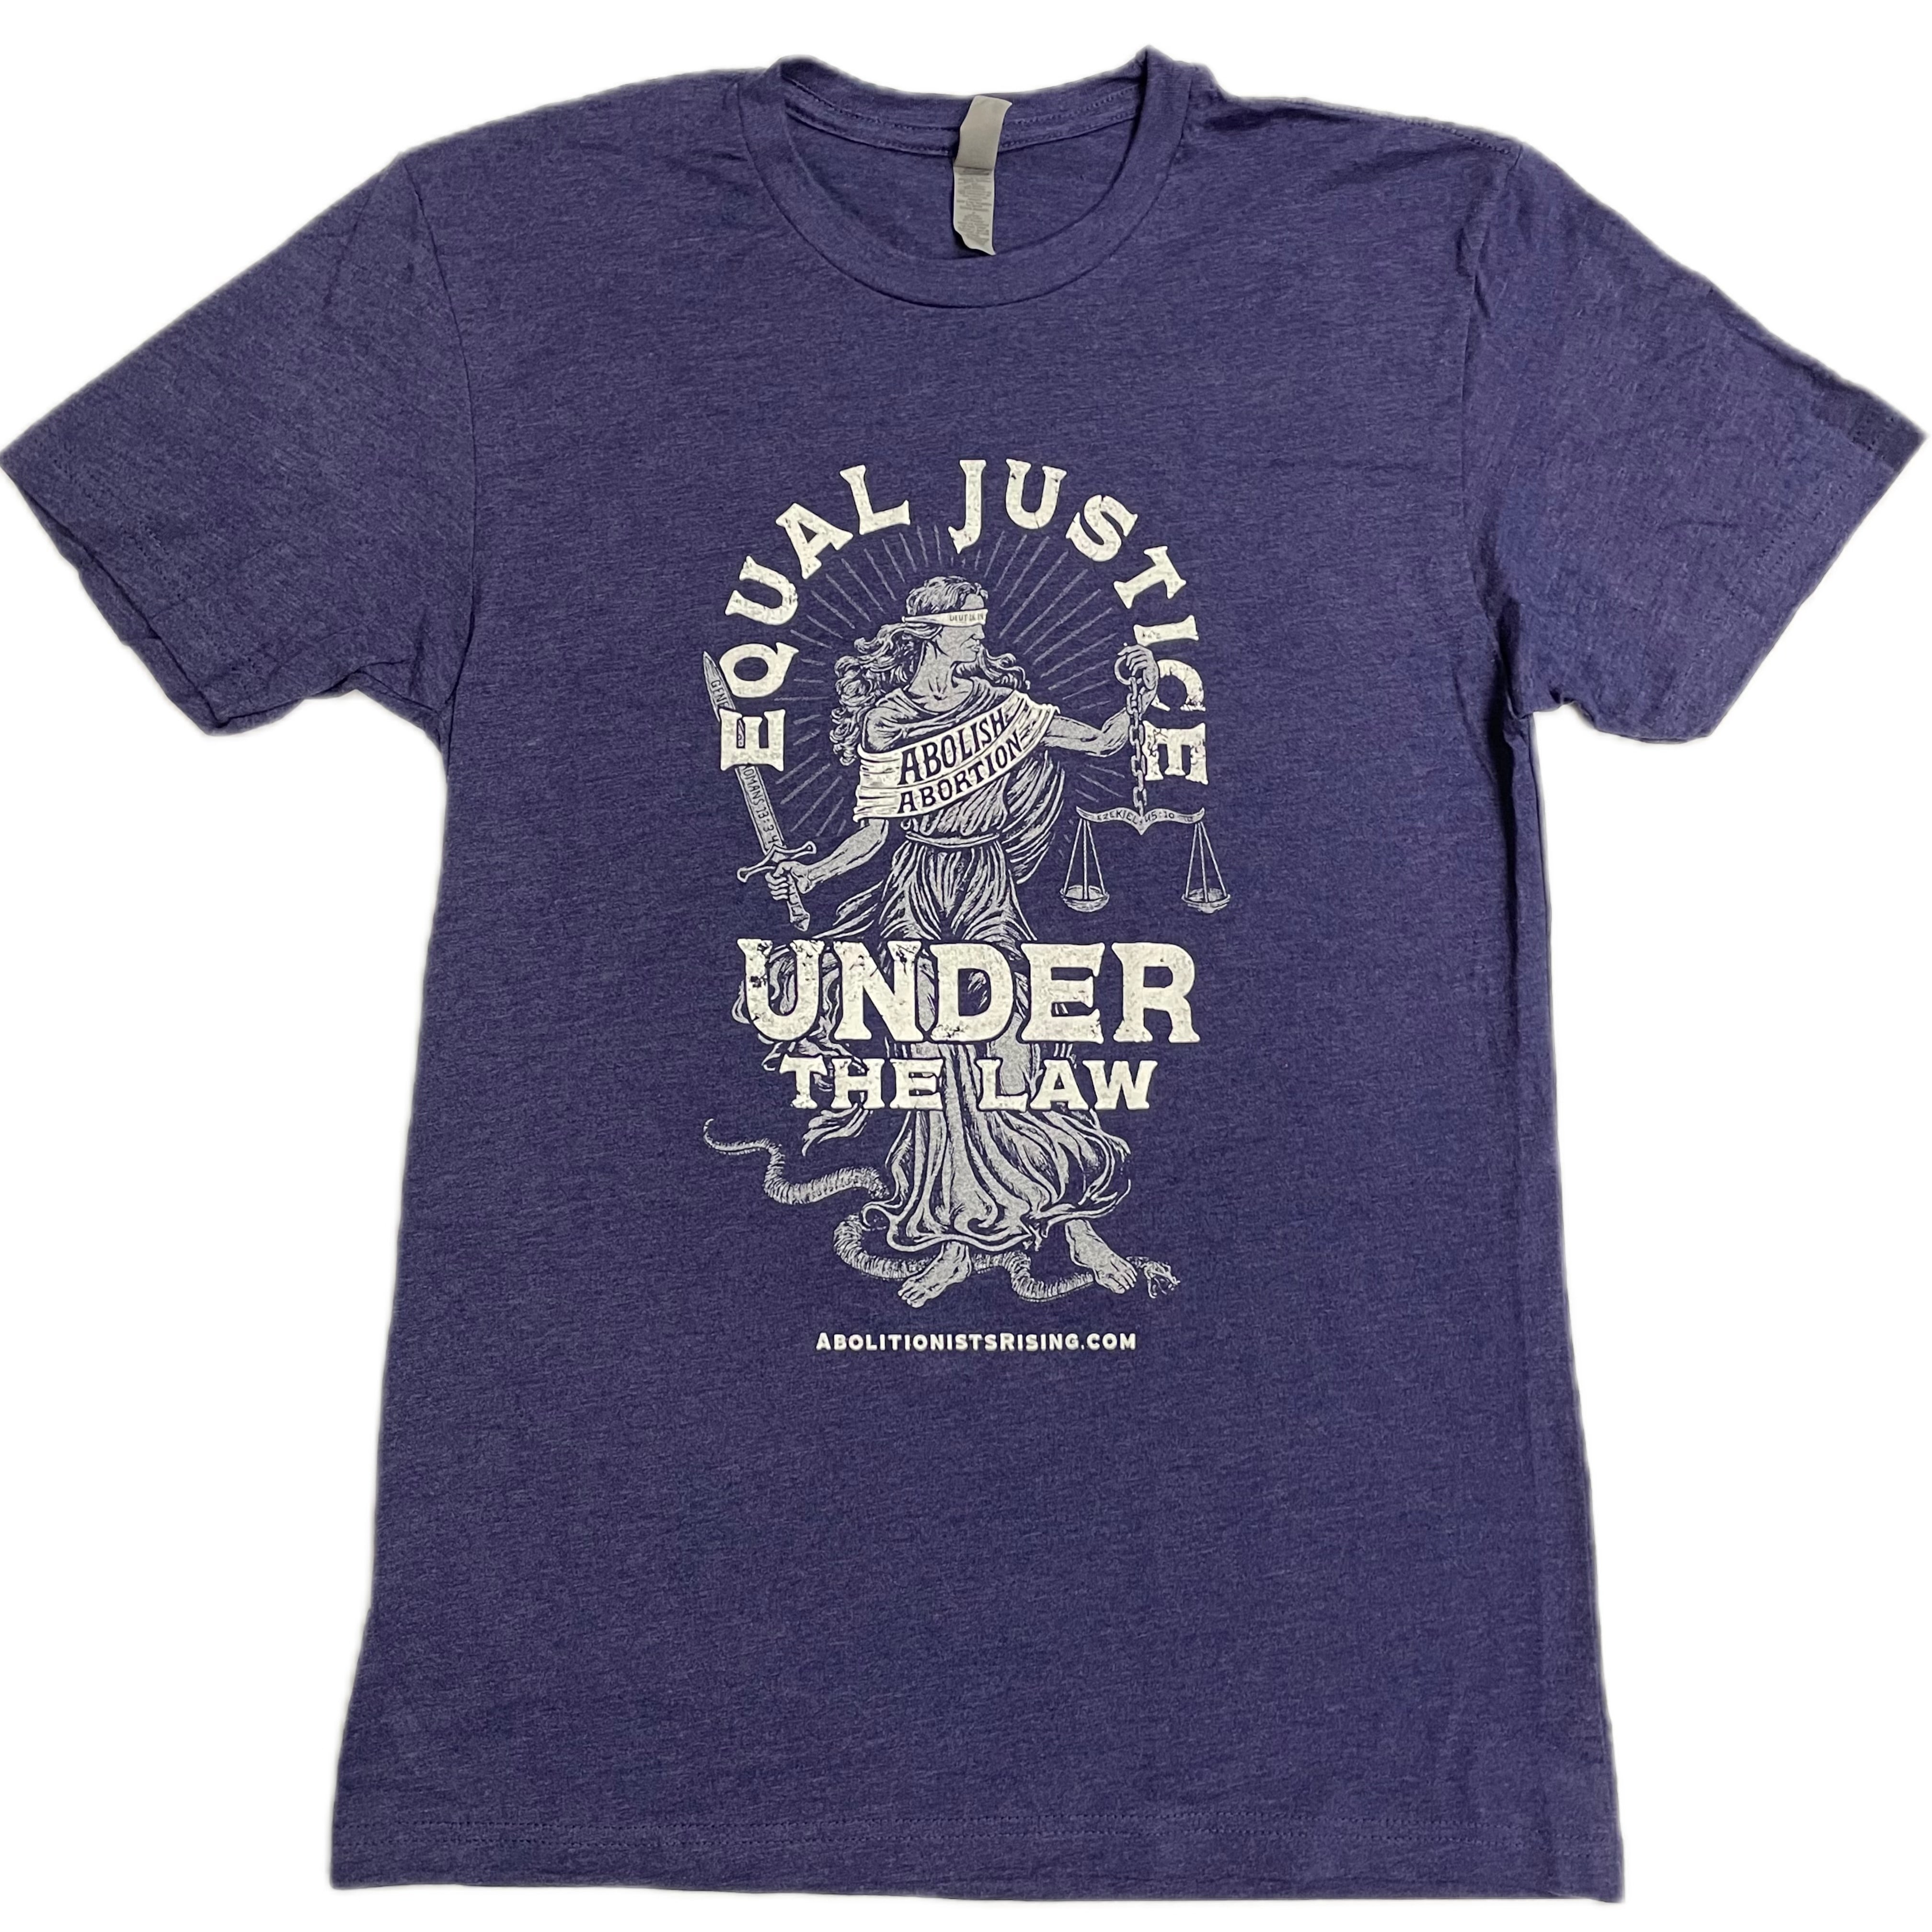 Equal Justice Under Law T-Shirt (Unisex) & Dropcard Bundle